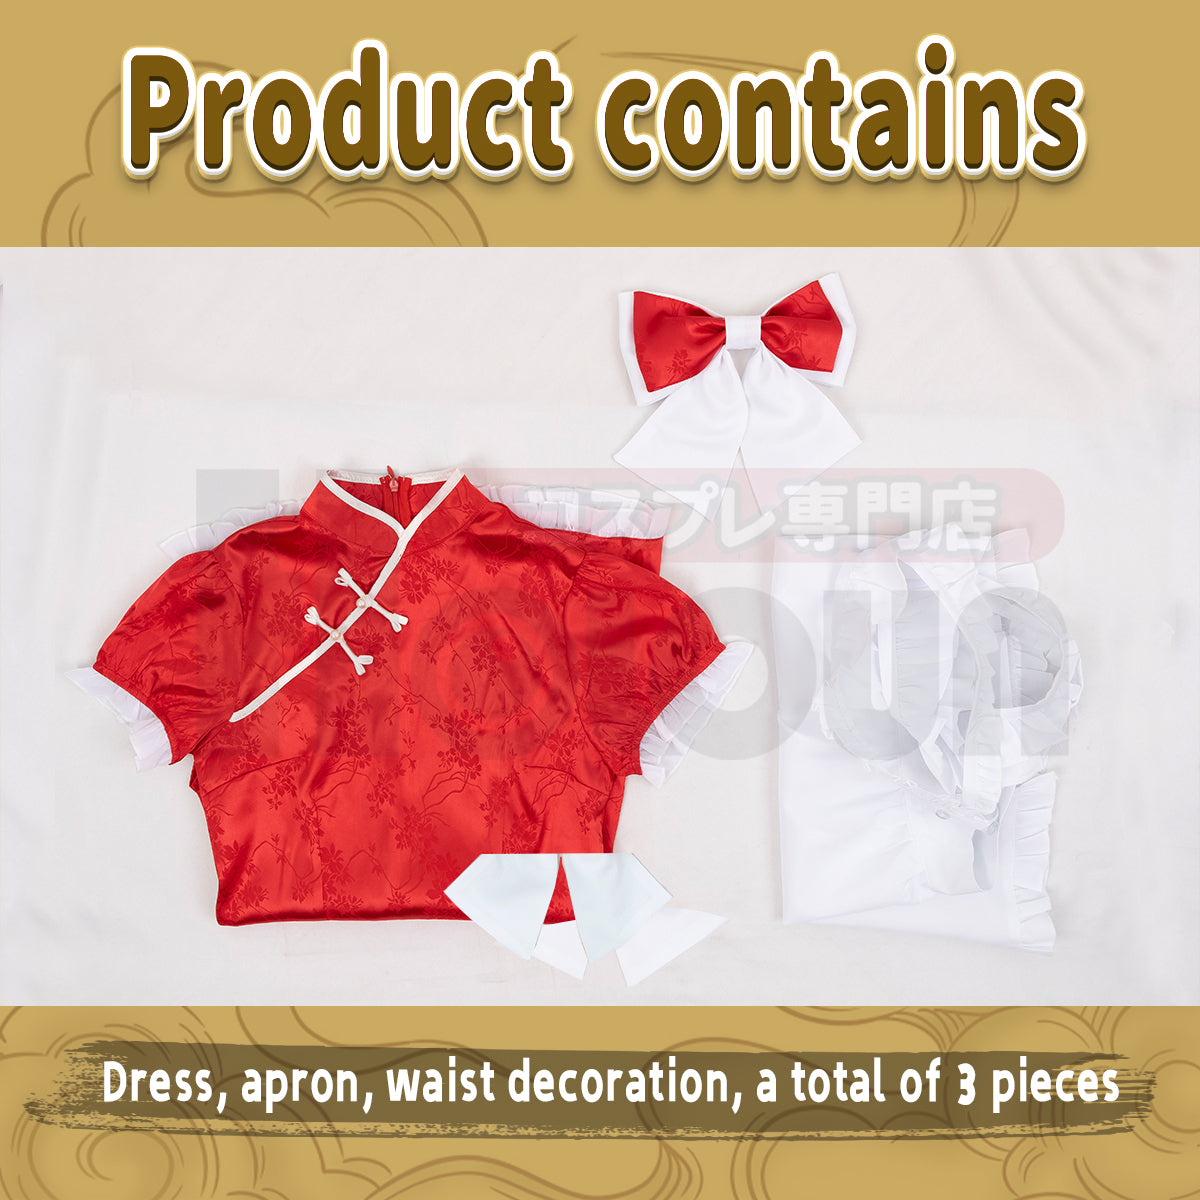 HOLOUN Lolita Maid Dress Skirt China Costume Cute Cheongsam Cafe Uniform Apron Red Color Short Sleeve Daily Wear Gift